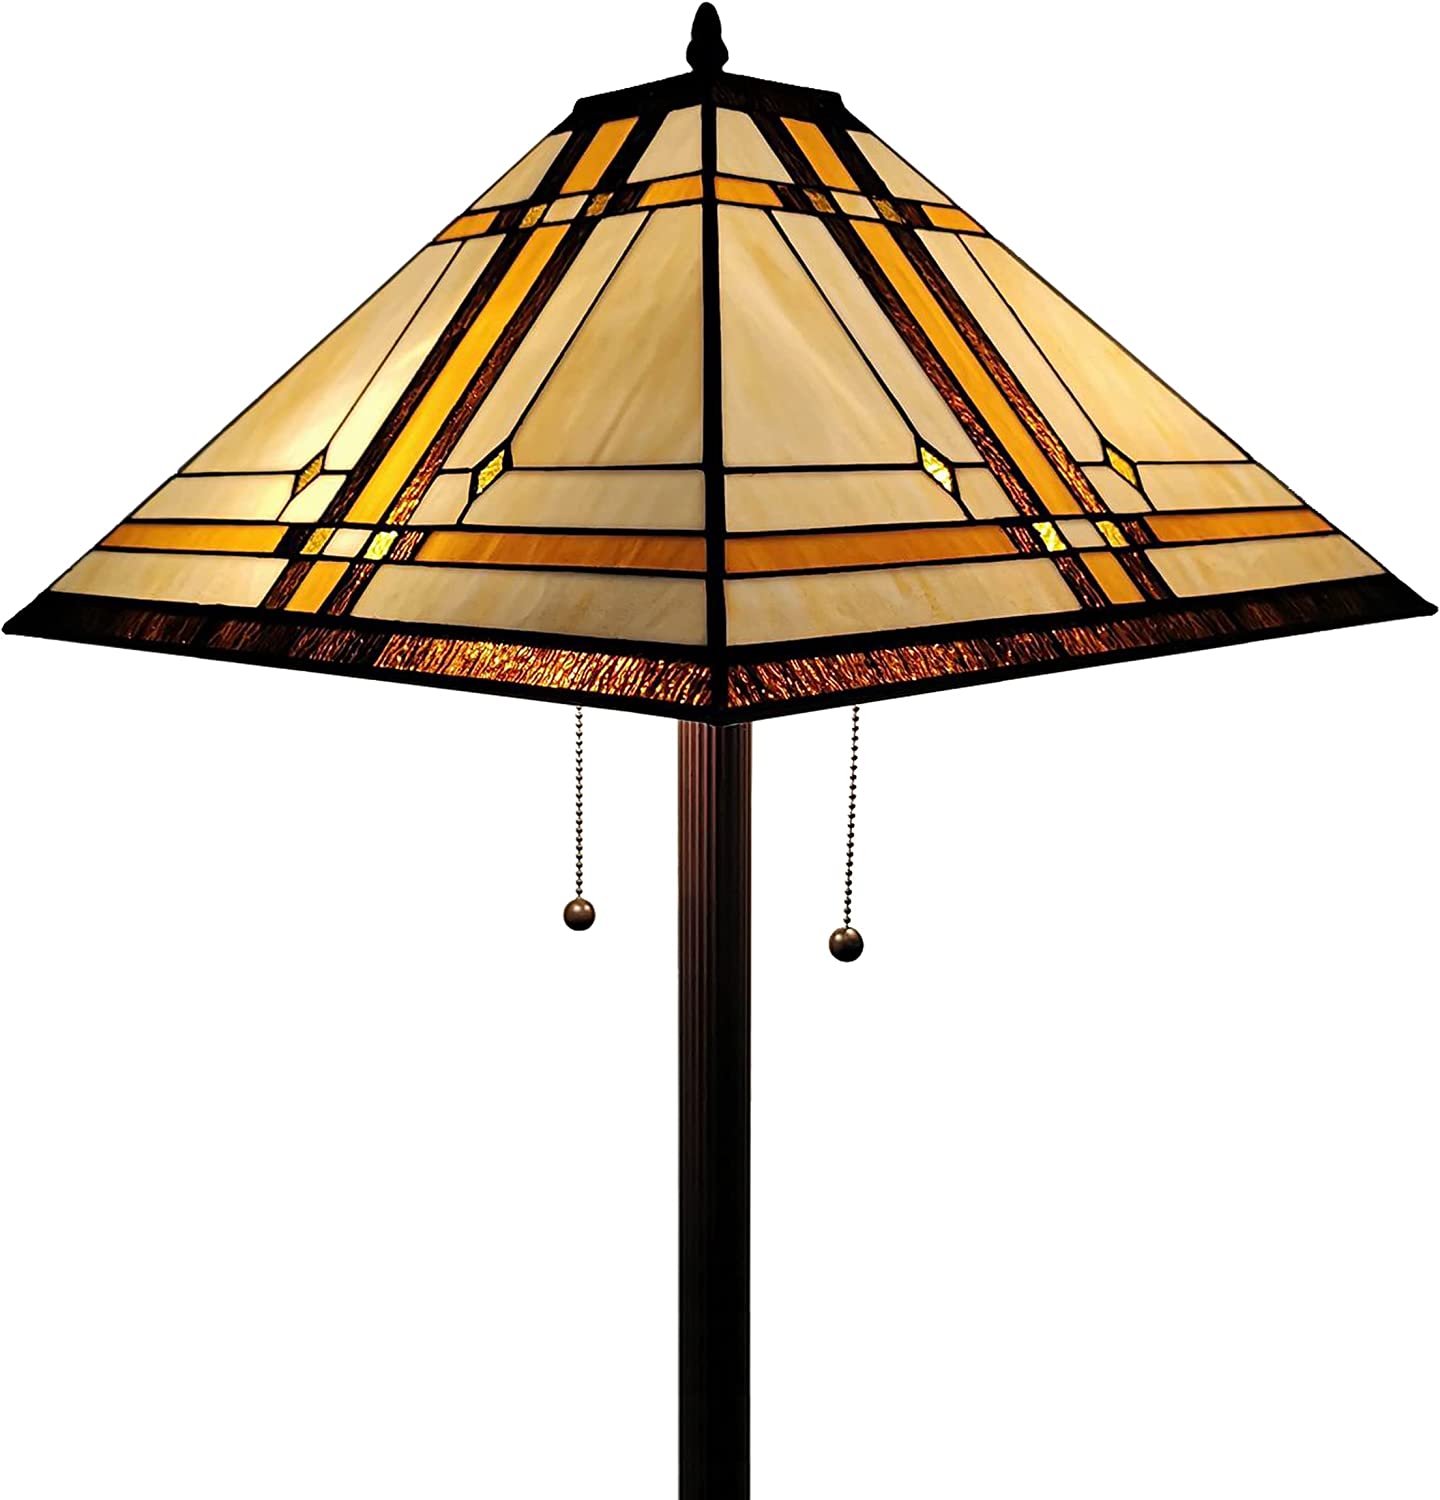 BBNBDMZ  Floor Lamp Torchiere - Vintage Standing Light Floor Lamp - 61\u201D Tall Floor Stained Glass Lamp -  Floor Lamps for Living Room